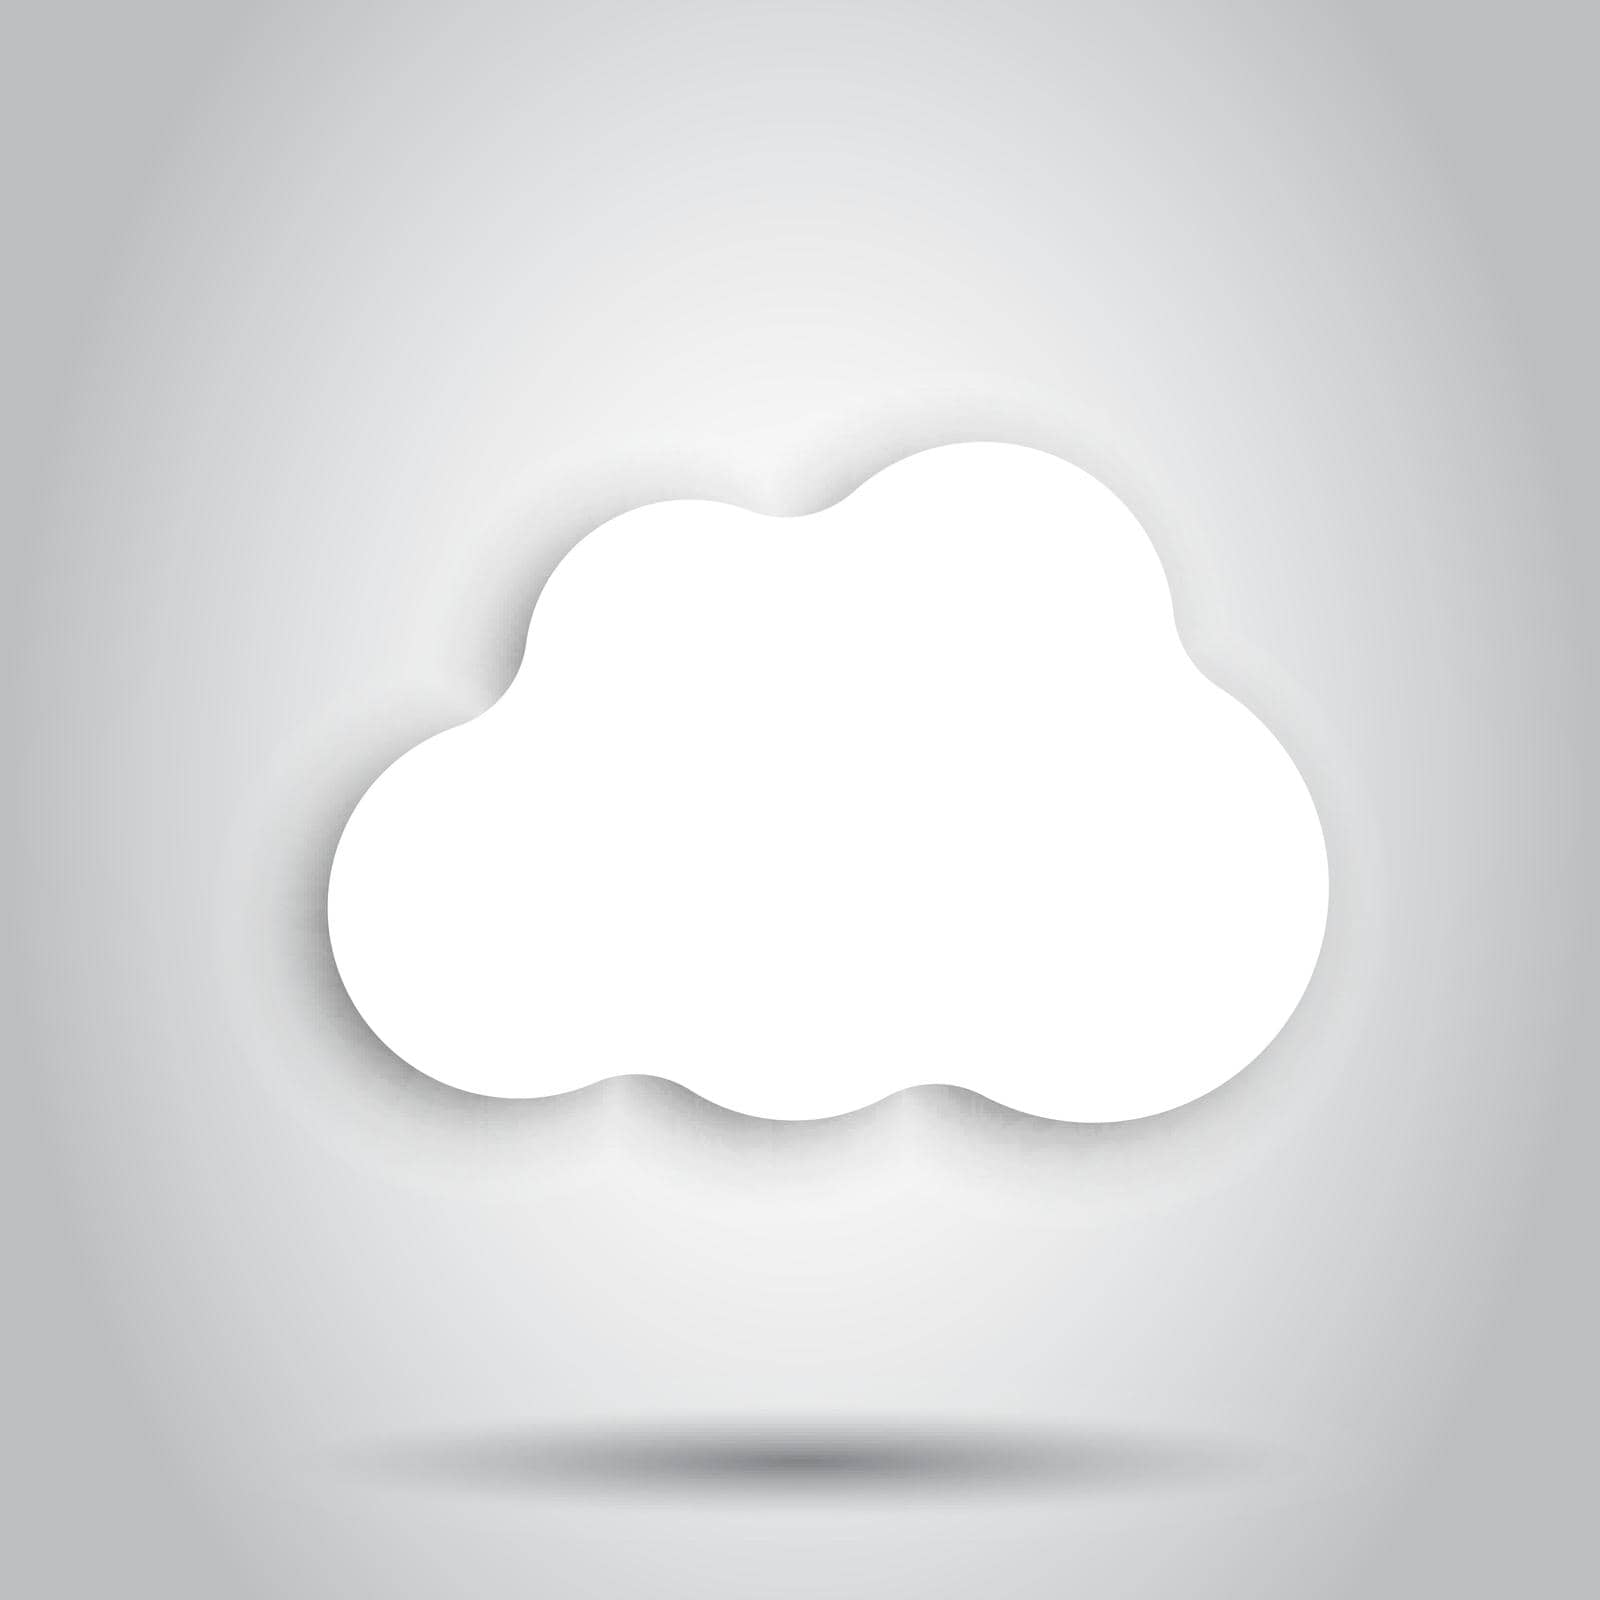 Paper clouds sky. Сartoon paper cloud illustration background. Air business concept.